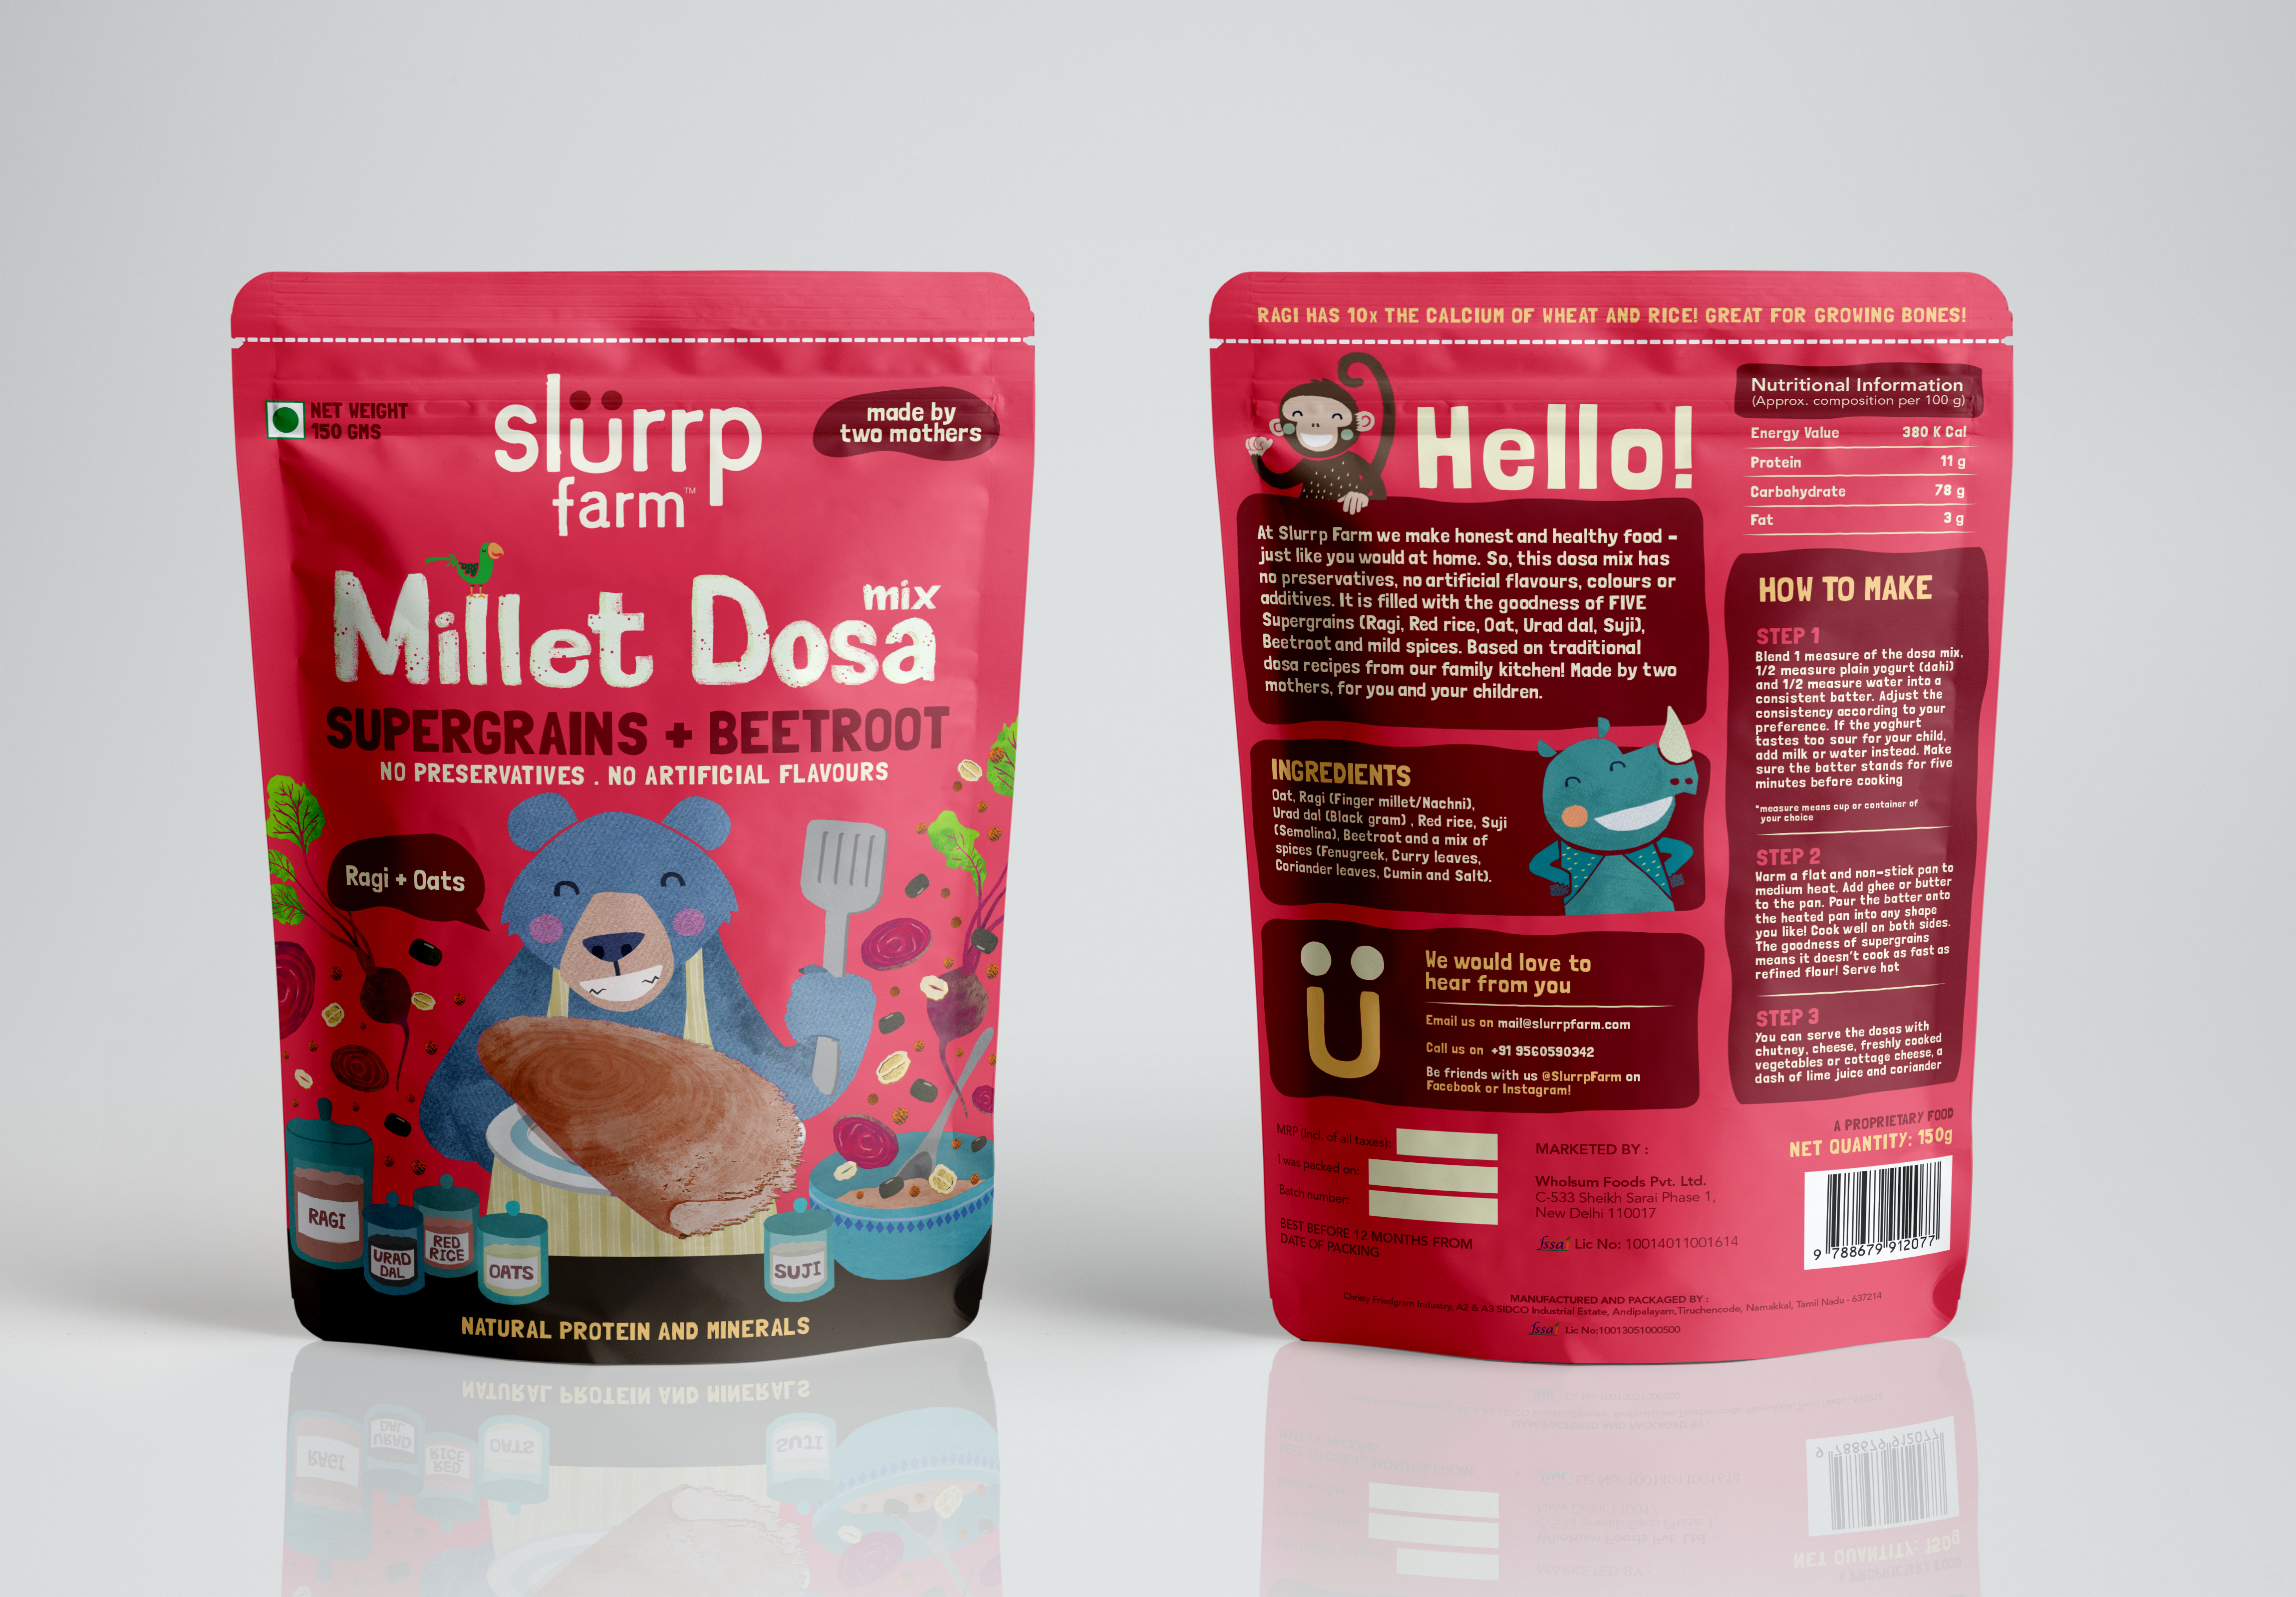 Slurrp Farm Millet Dosa - Supergrains + Beetroot